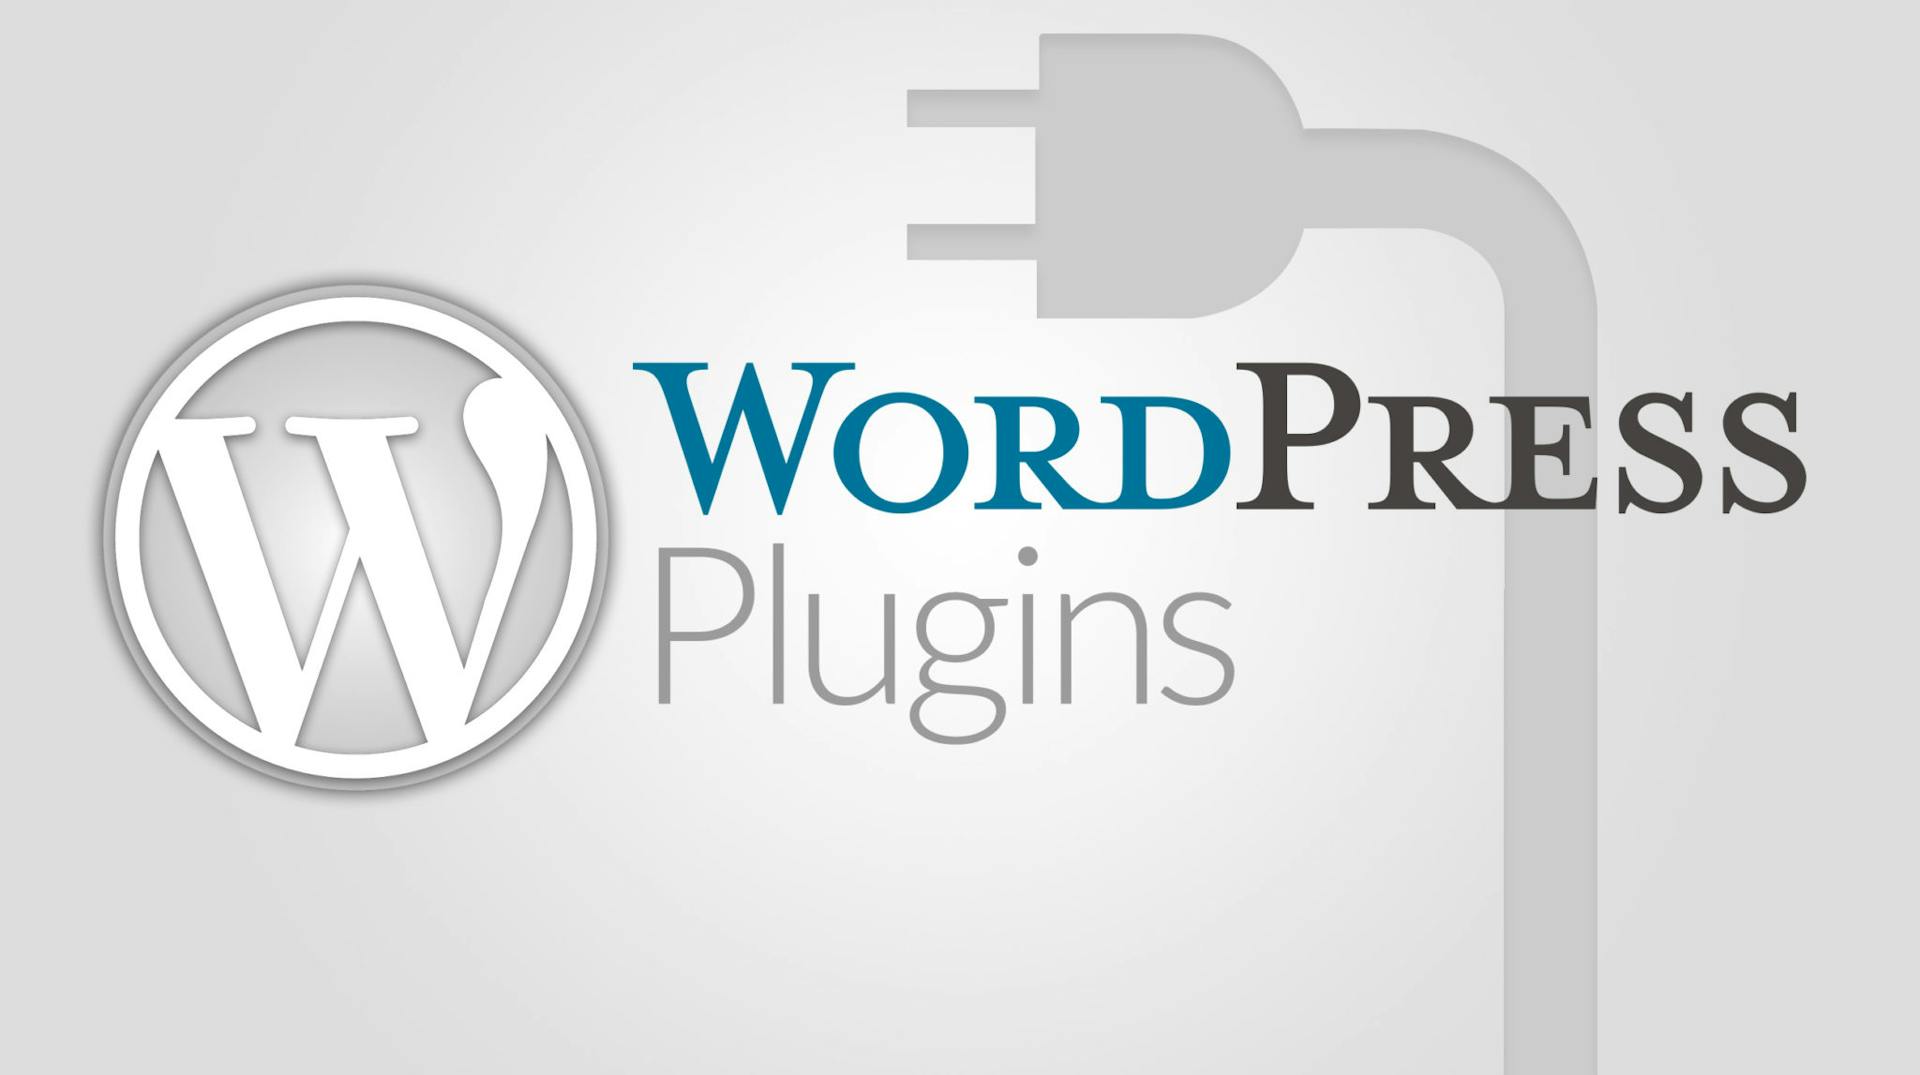 9 Essential Plugins Every WordPress Site Needs